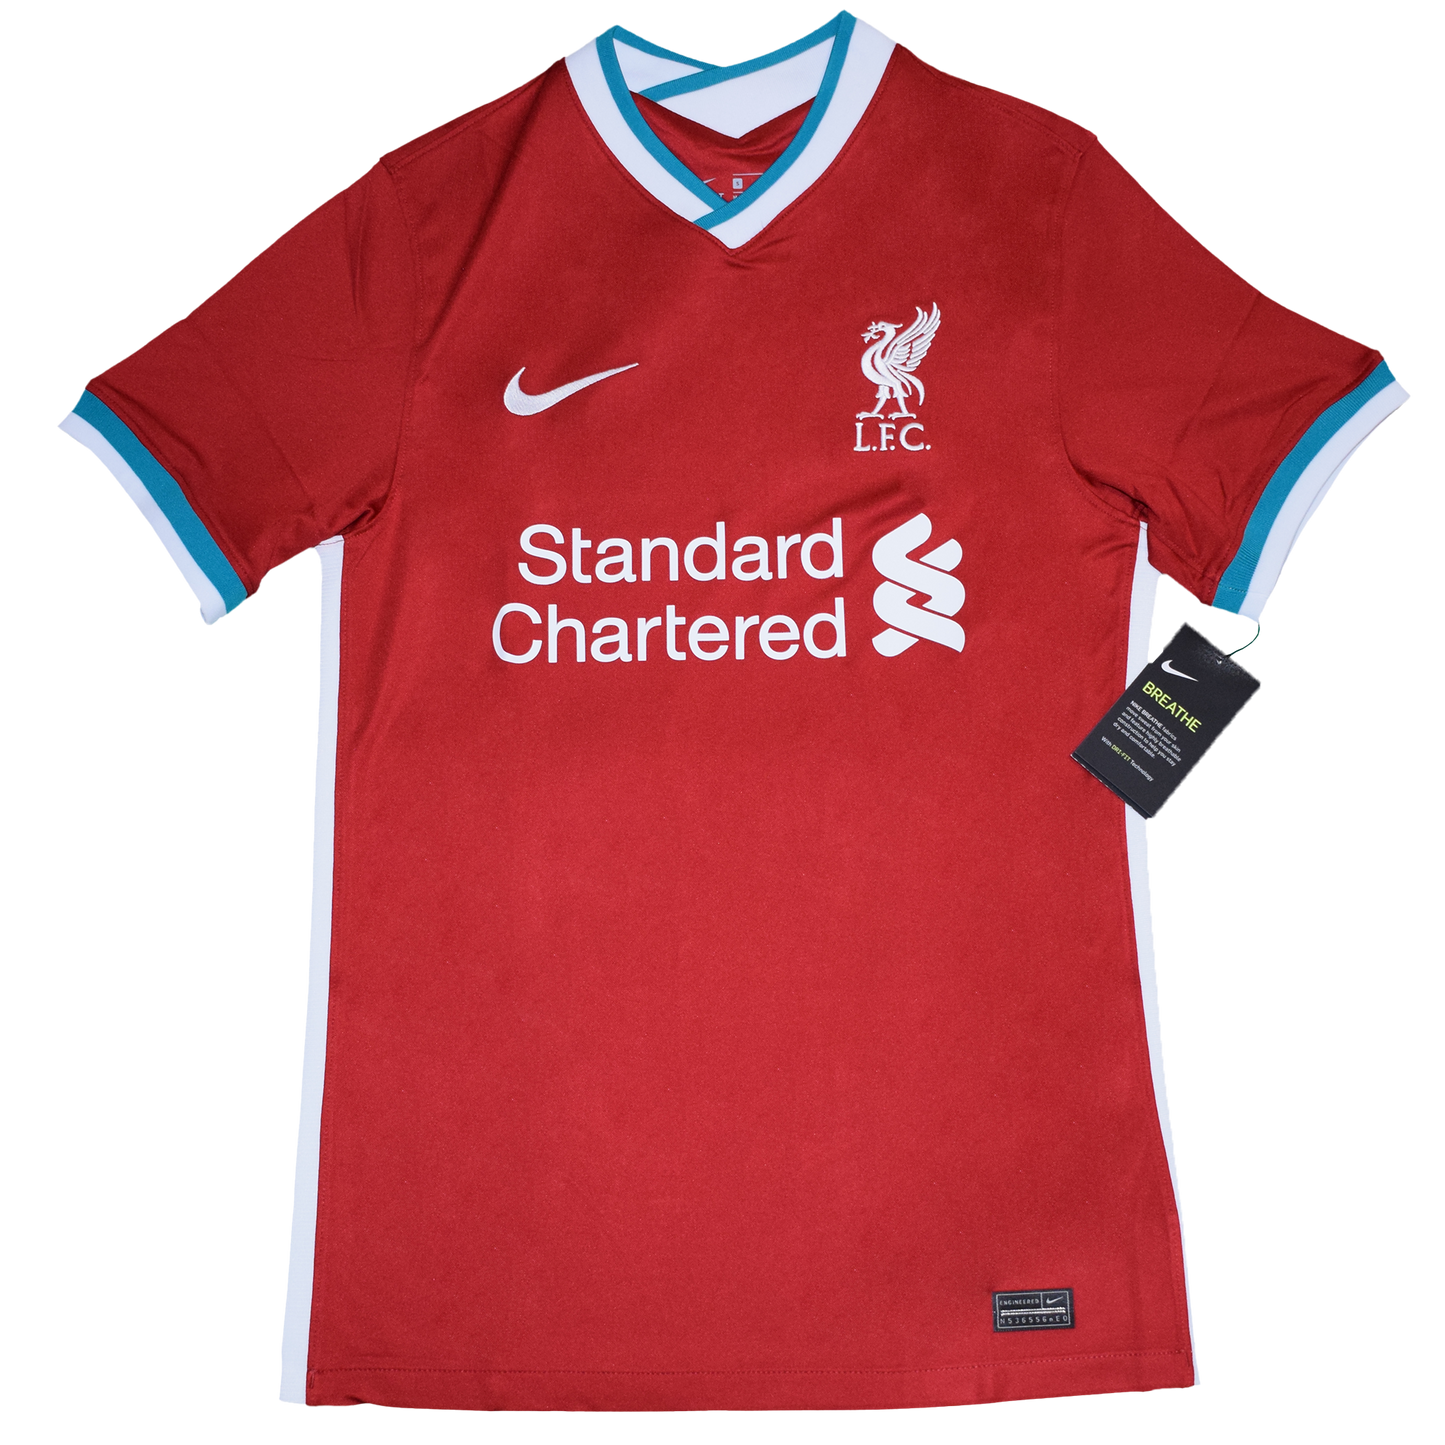 Liverpool 2020/21 Home kit Small BNWT